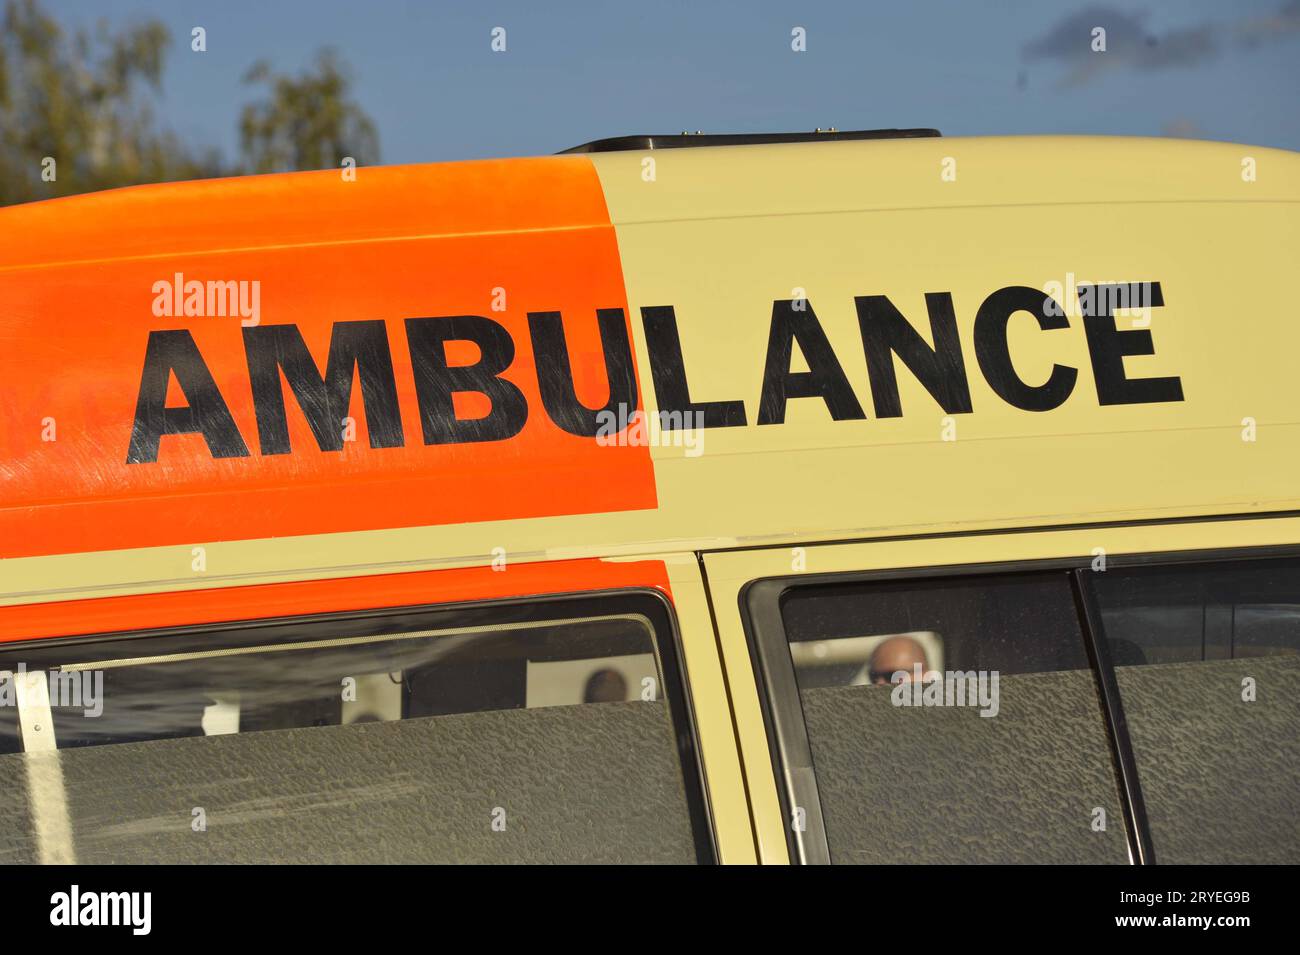 Ambulance sign on ambulance vehicle Stock Photo